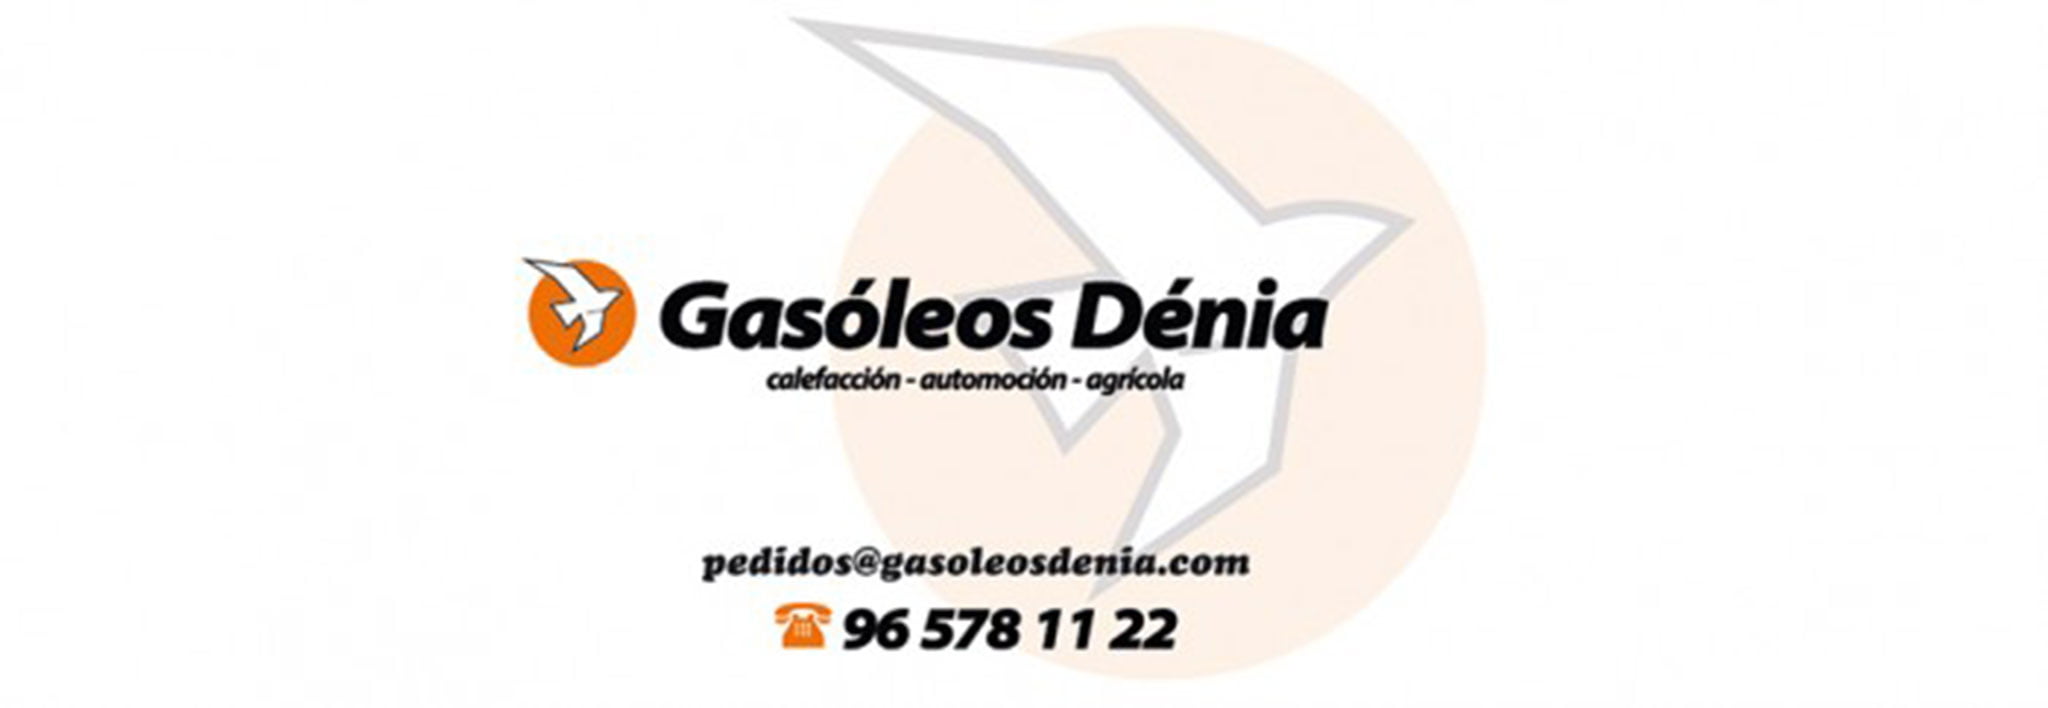 Logotipo de Gasóleos Dénia